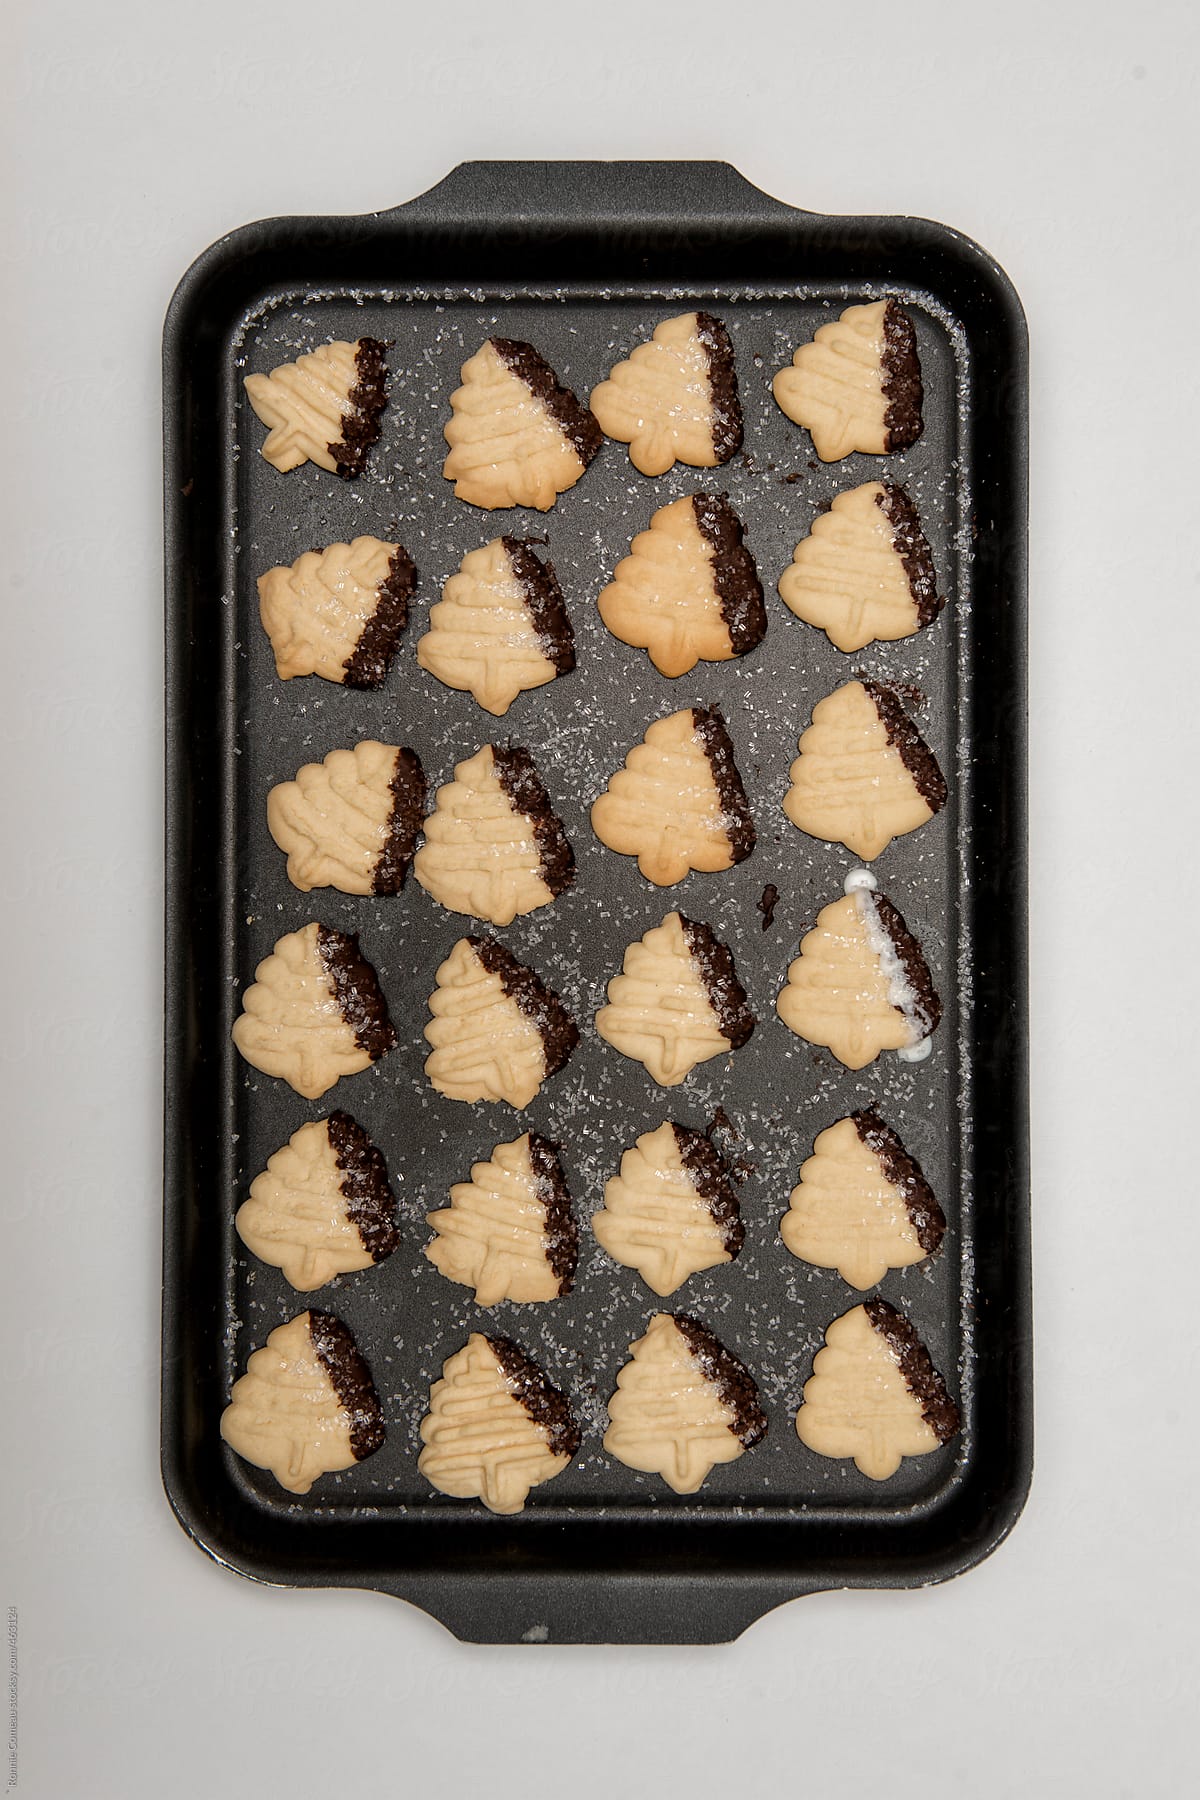 Baking Pan With Christmas Cookies